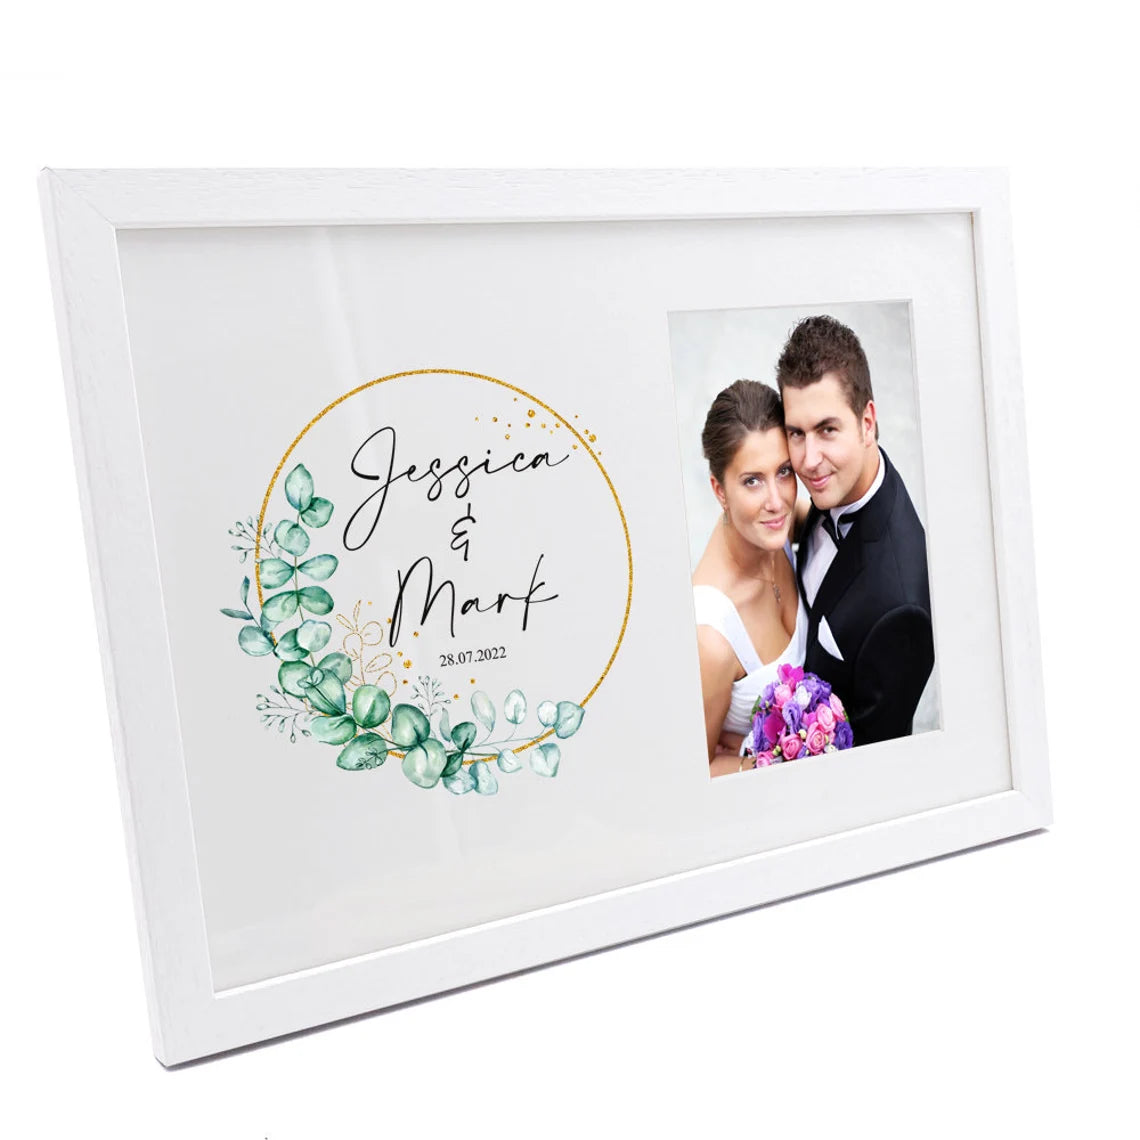 Personalised Wedding Photo Frame Gift With Eucalyptus Wreath Design